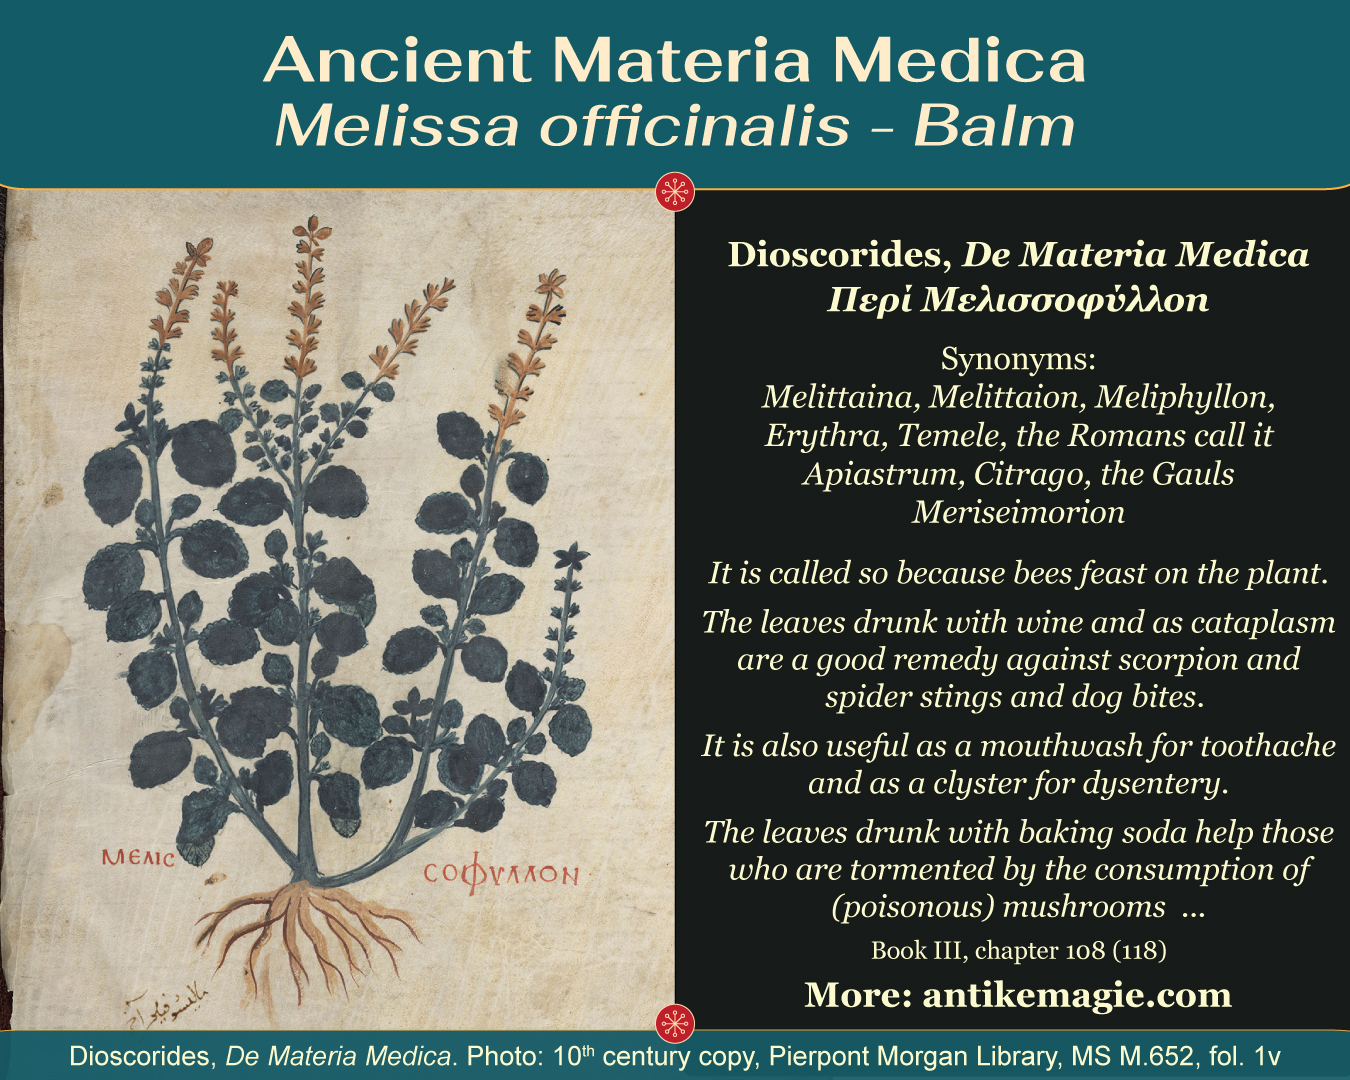 Materia-Medica-Melissa-officinalis-Balm-antikemagie.com